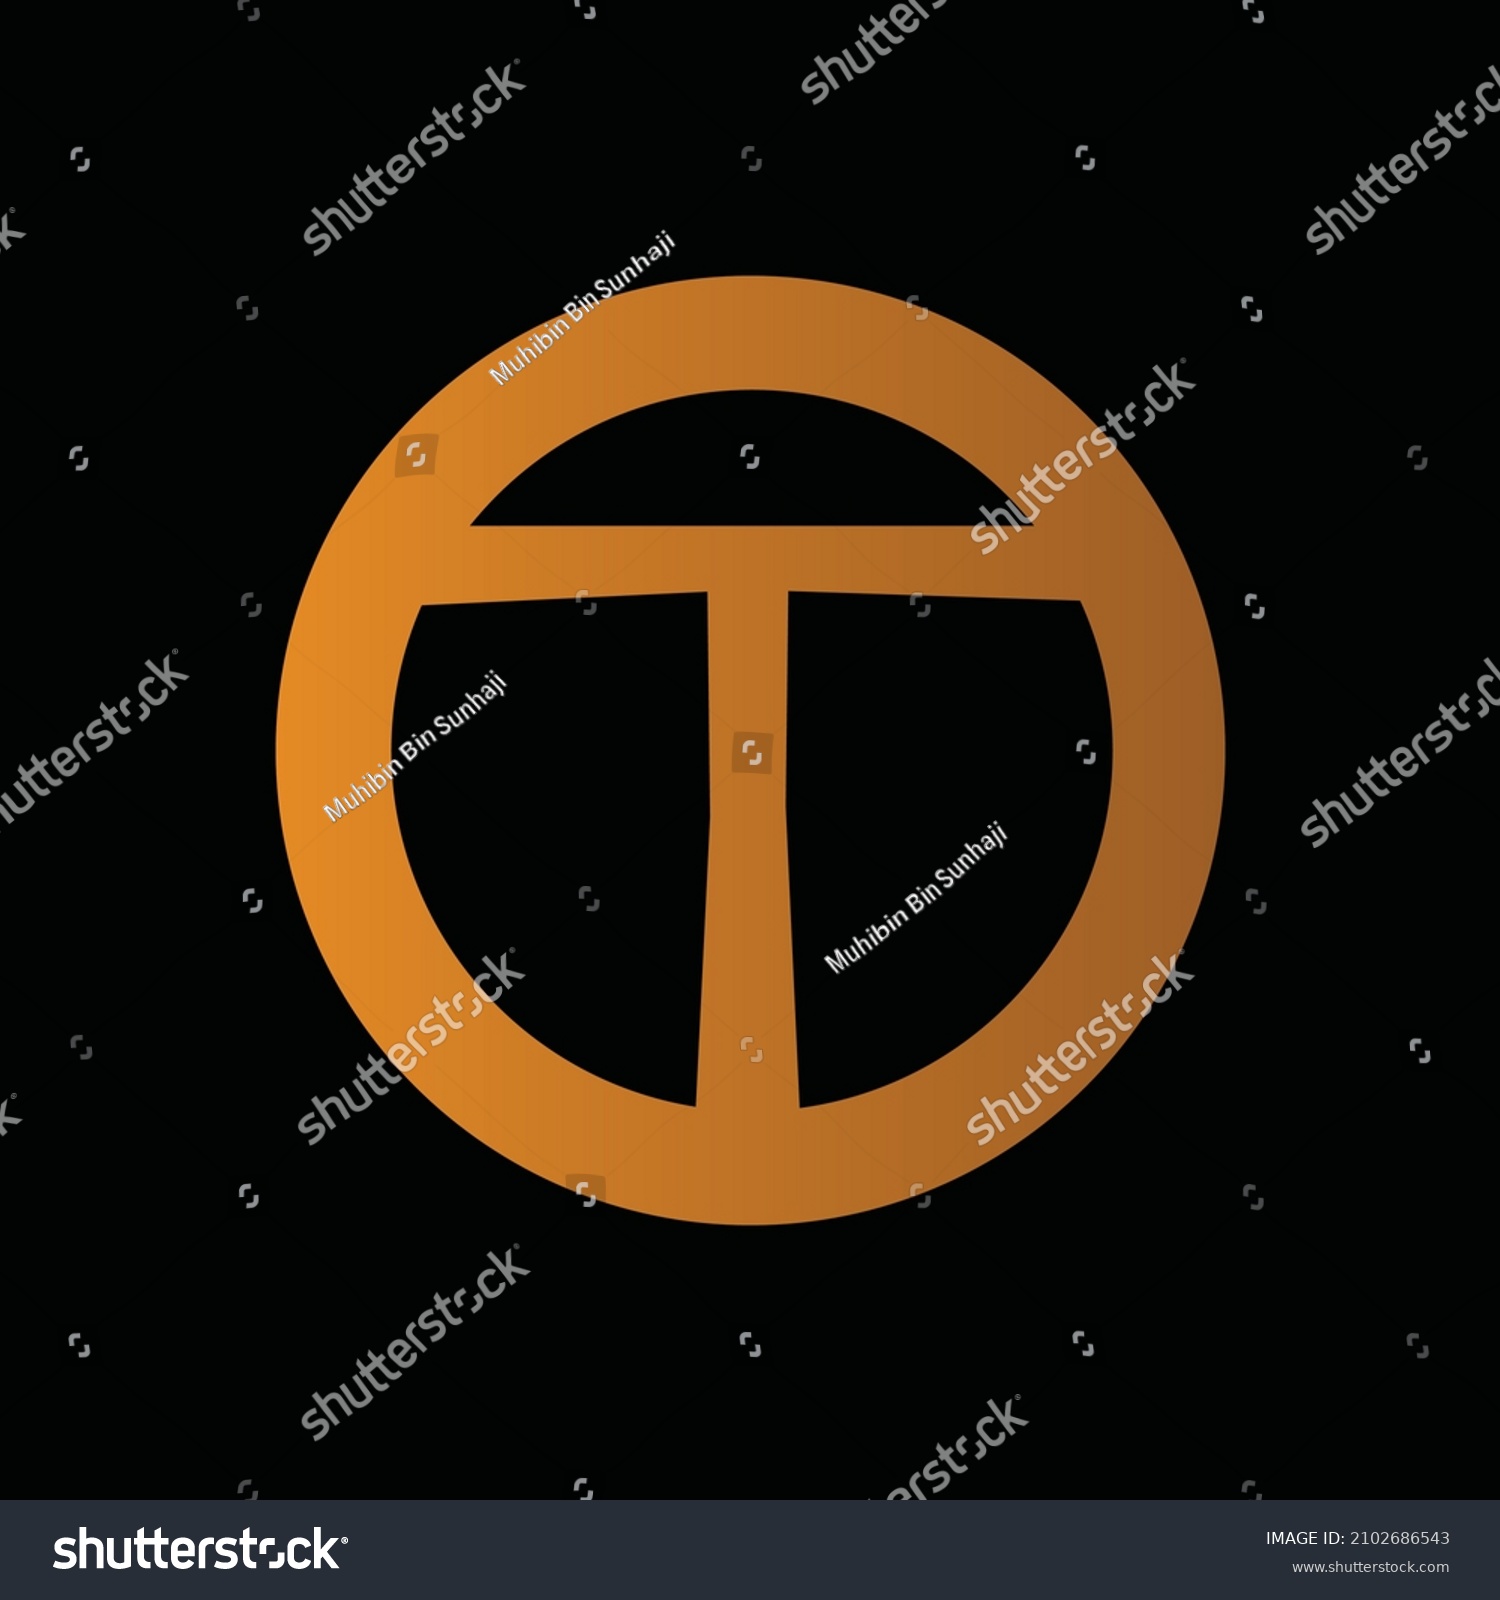 Circle t logo Images, Stock Photos & Vectors | Shutterstock